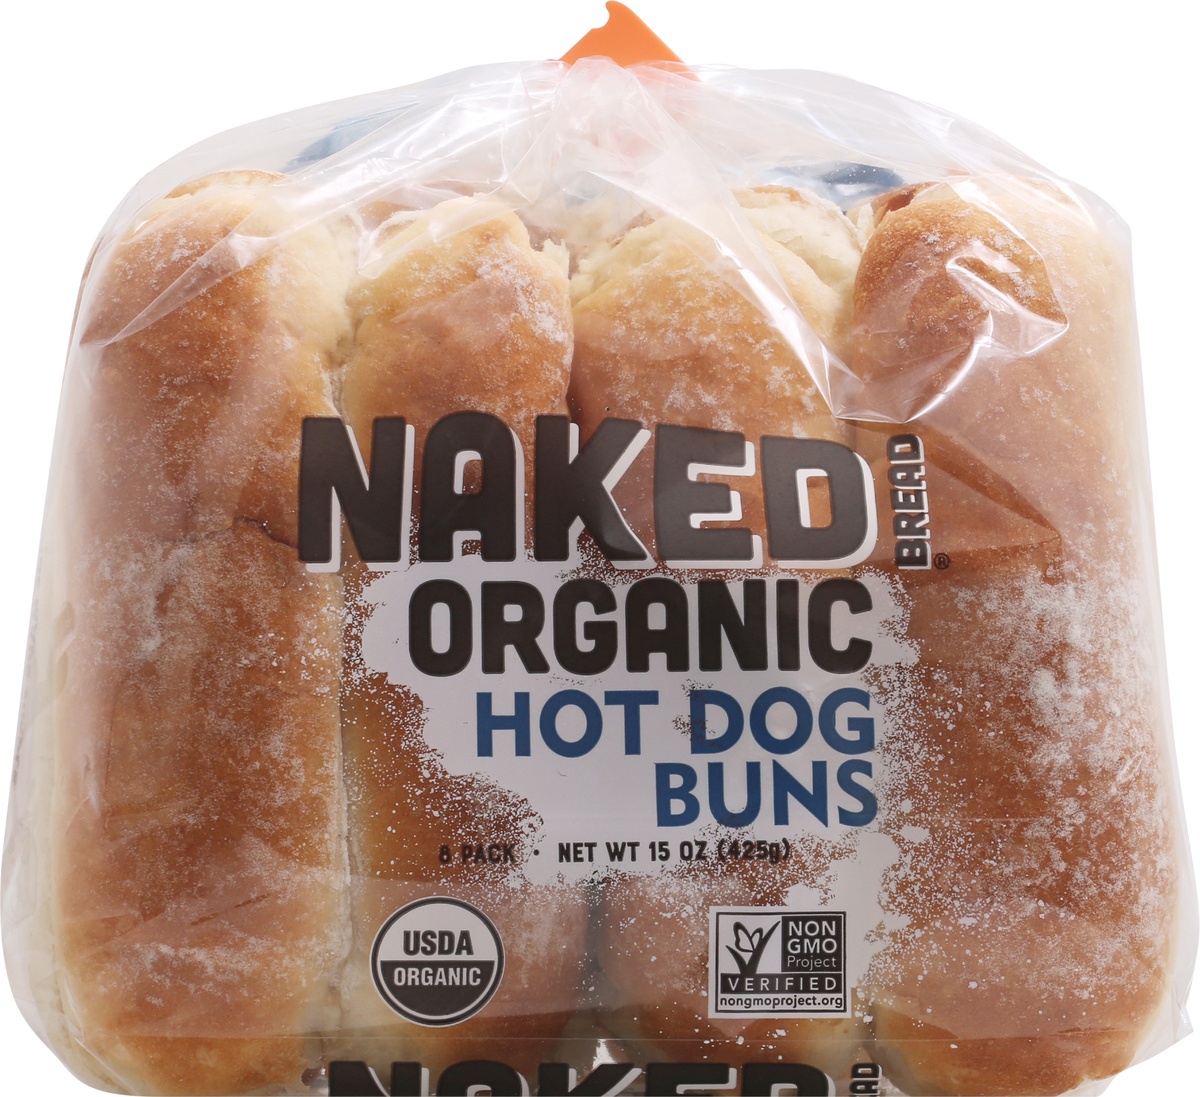 Franz Organic Naked Hot Dog Buns 15 oz | Shipt